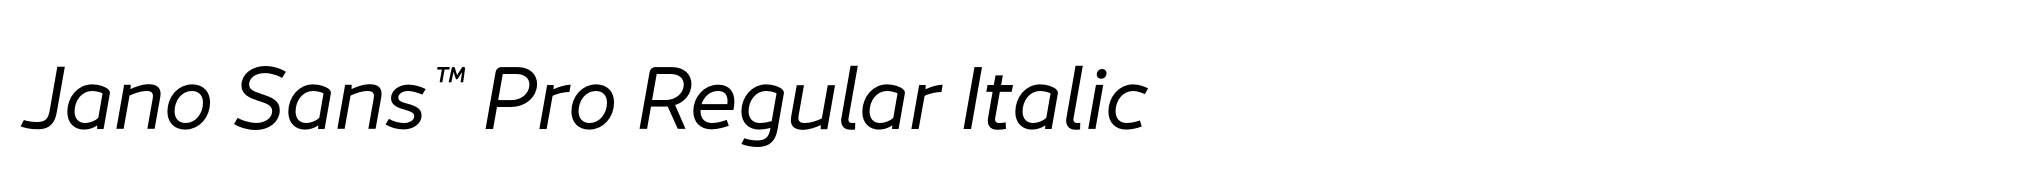 Jano Sans™ Pro Regular Italic image